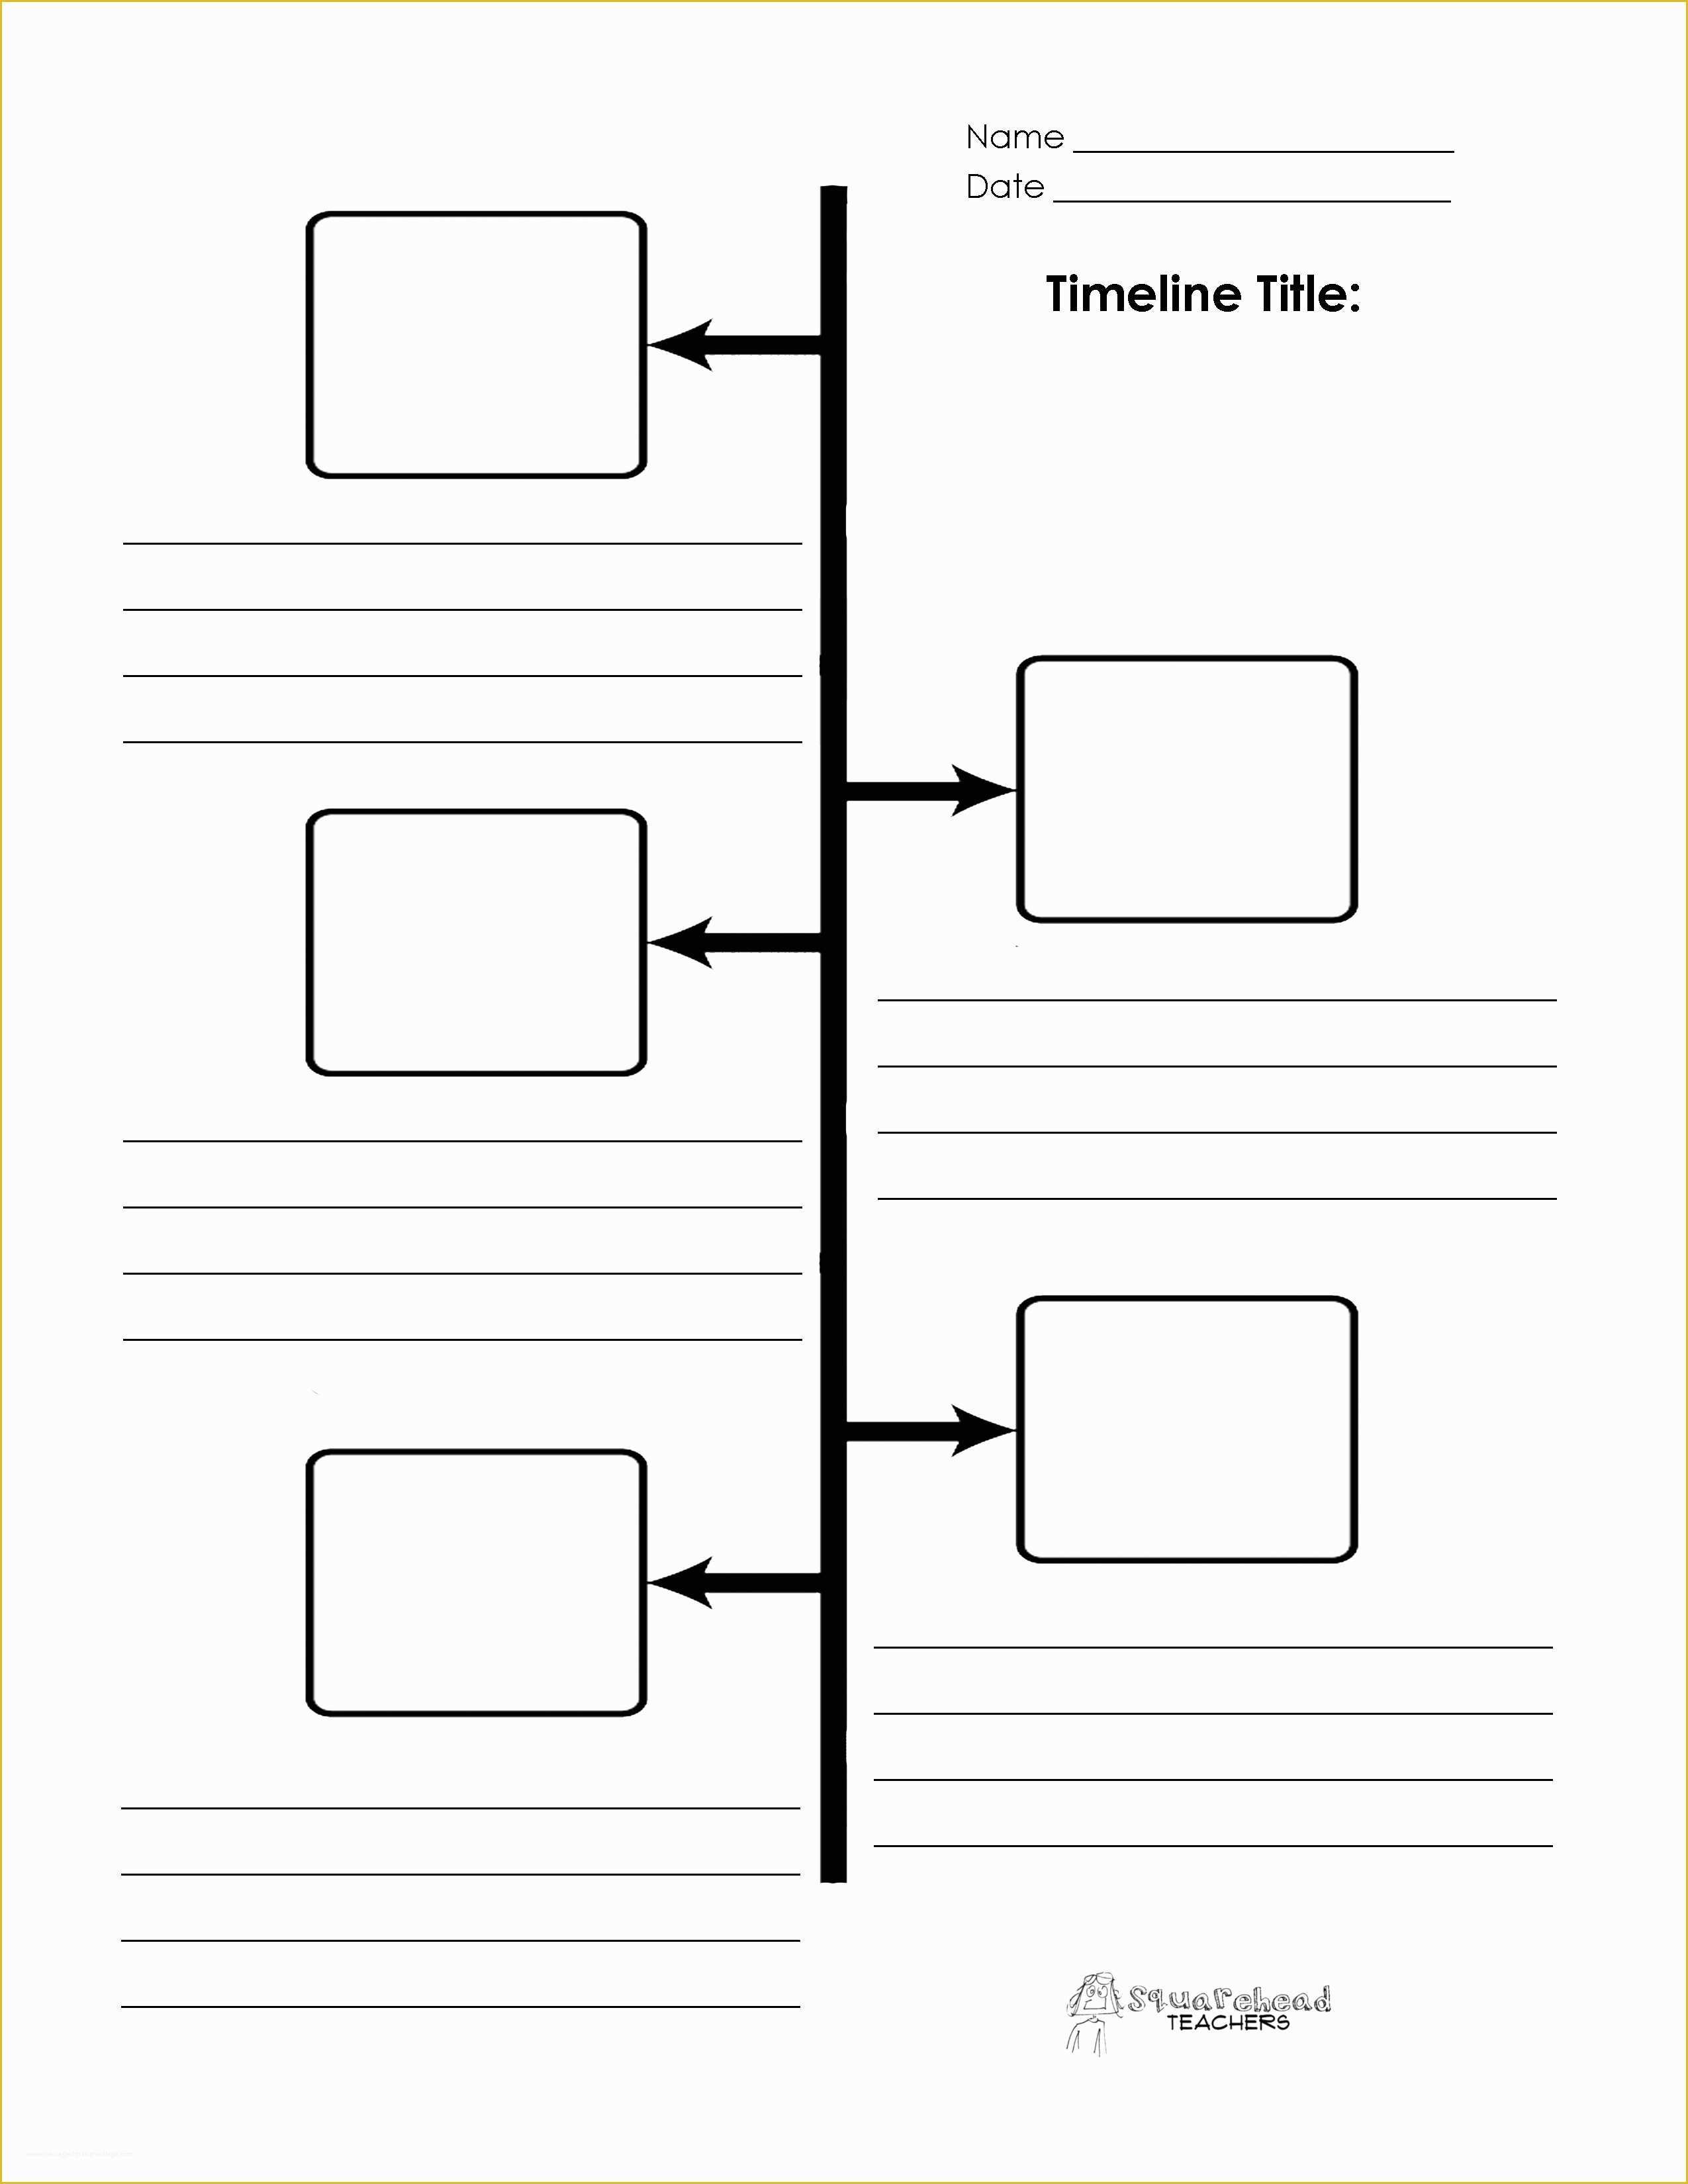 free-timeline-template-of-blank-timeline-printables